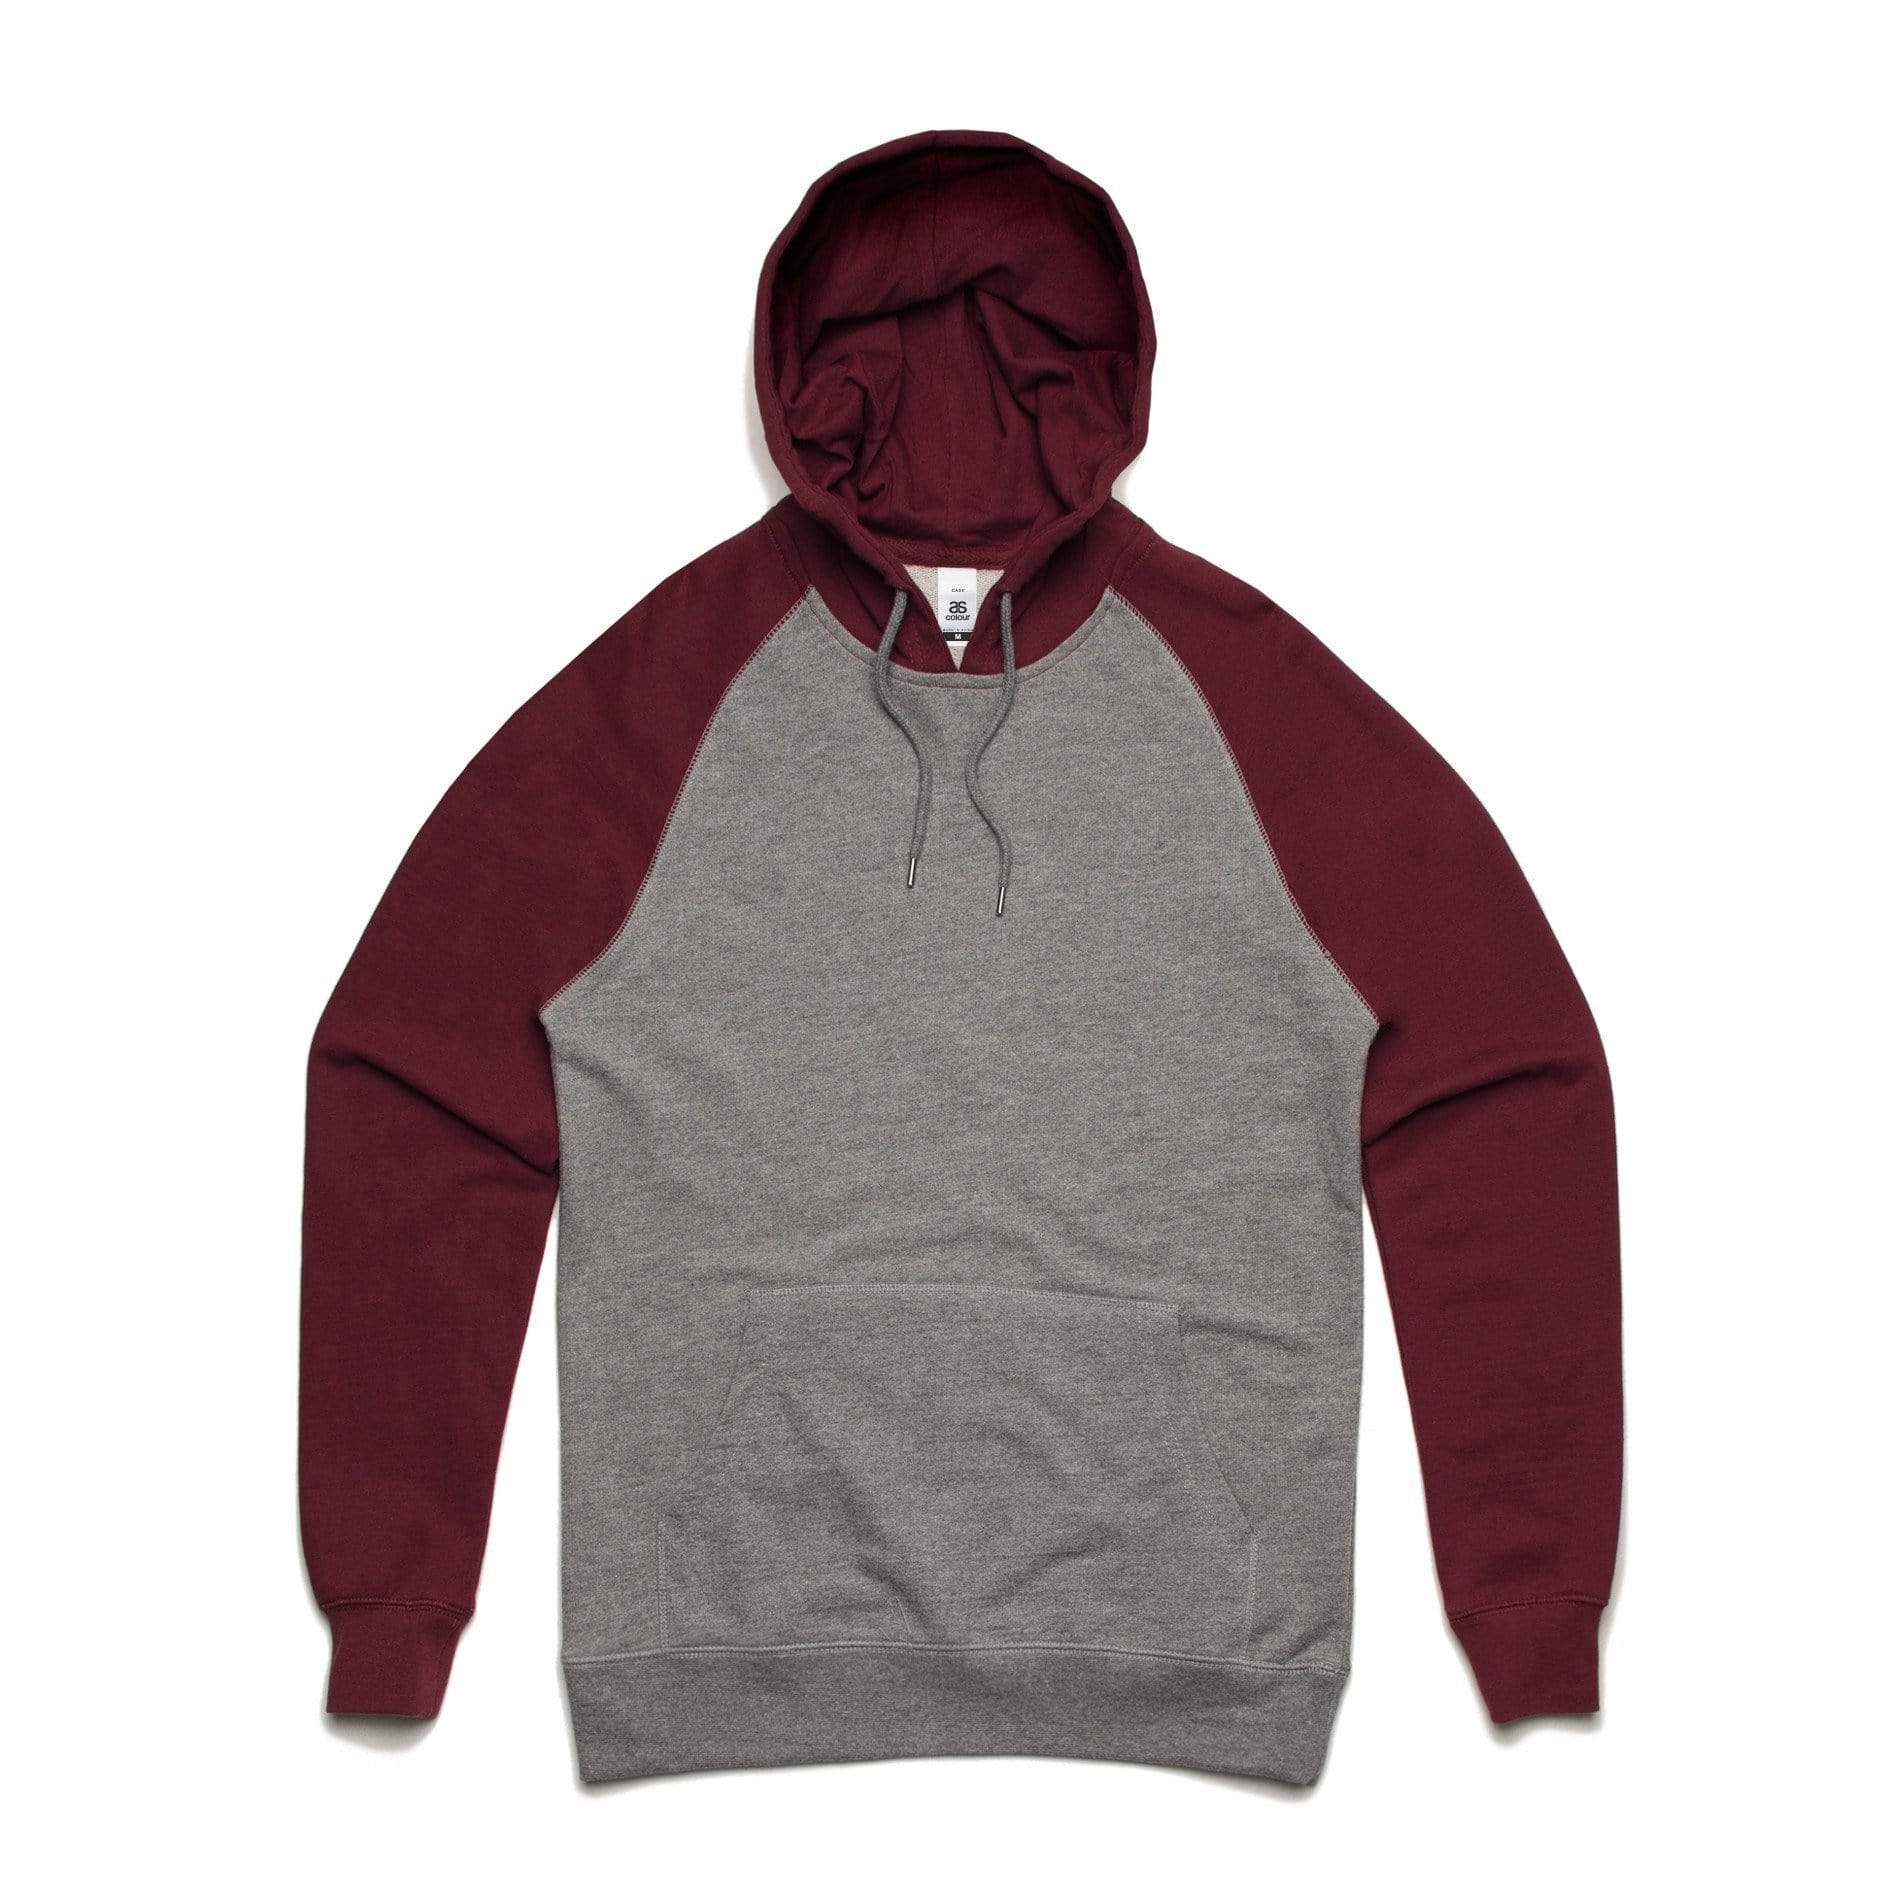 As Colour Casual Wear STEEL MARLE/BURGUNDY / XSM As Colour Men's case hoodie 5205